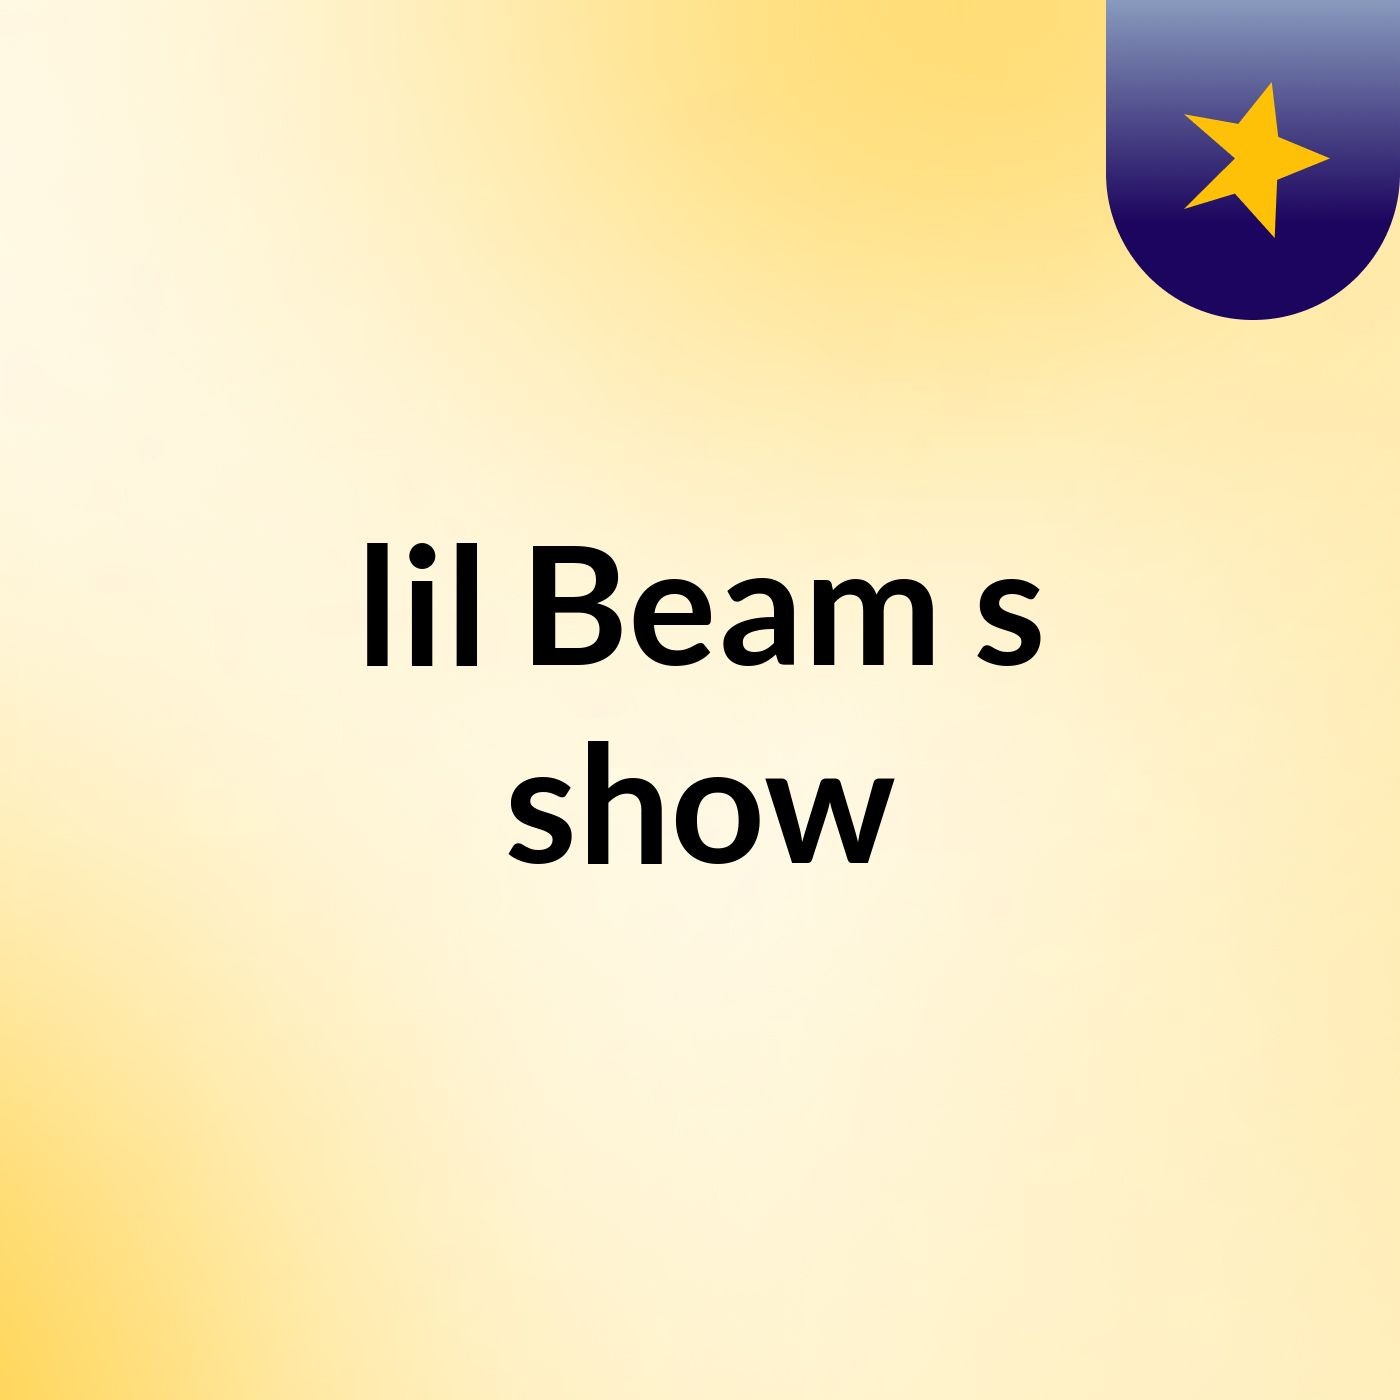 lil Beam's show